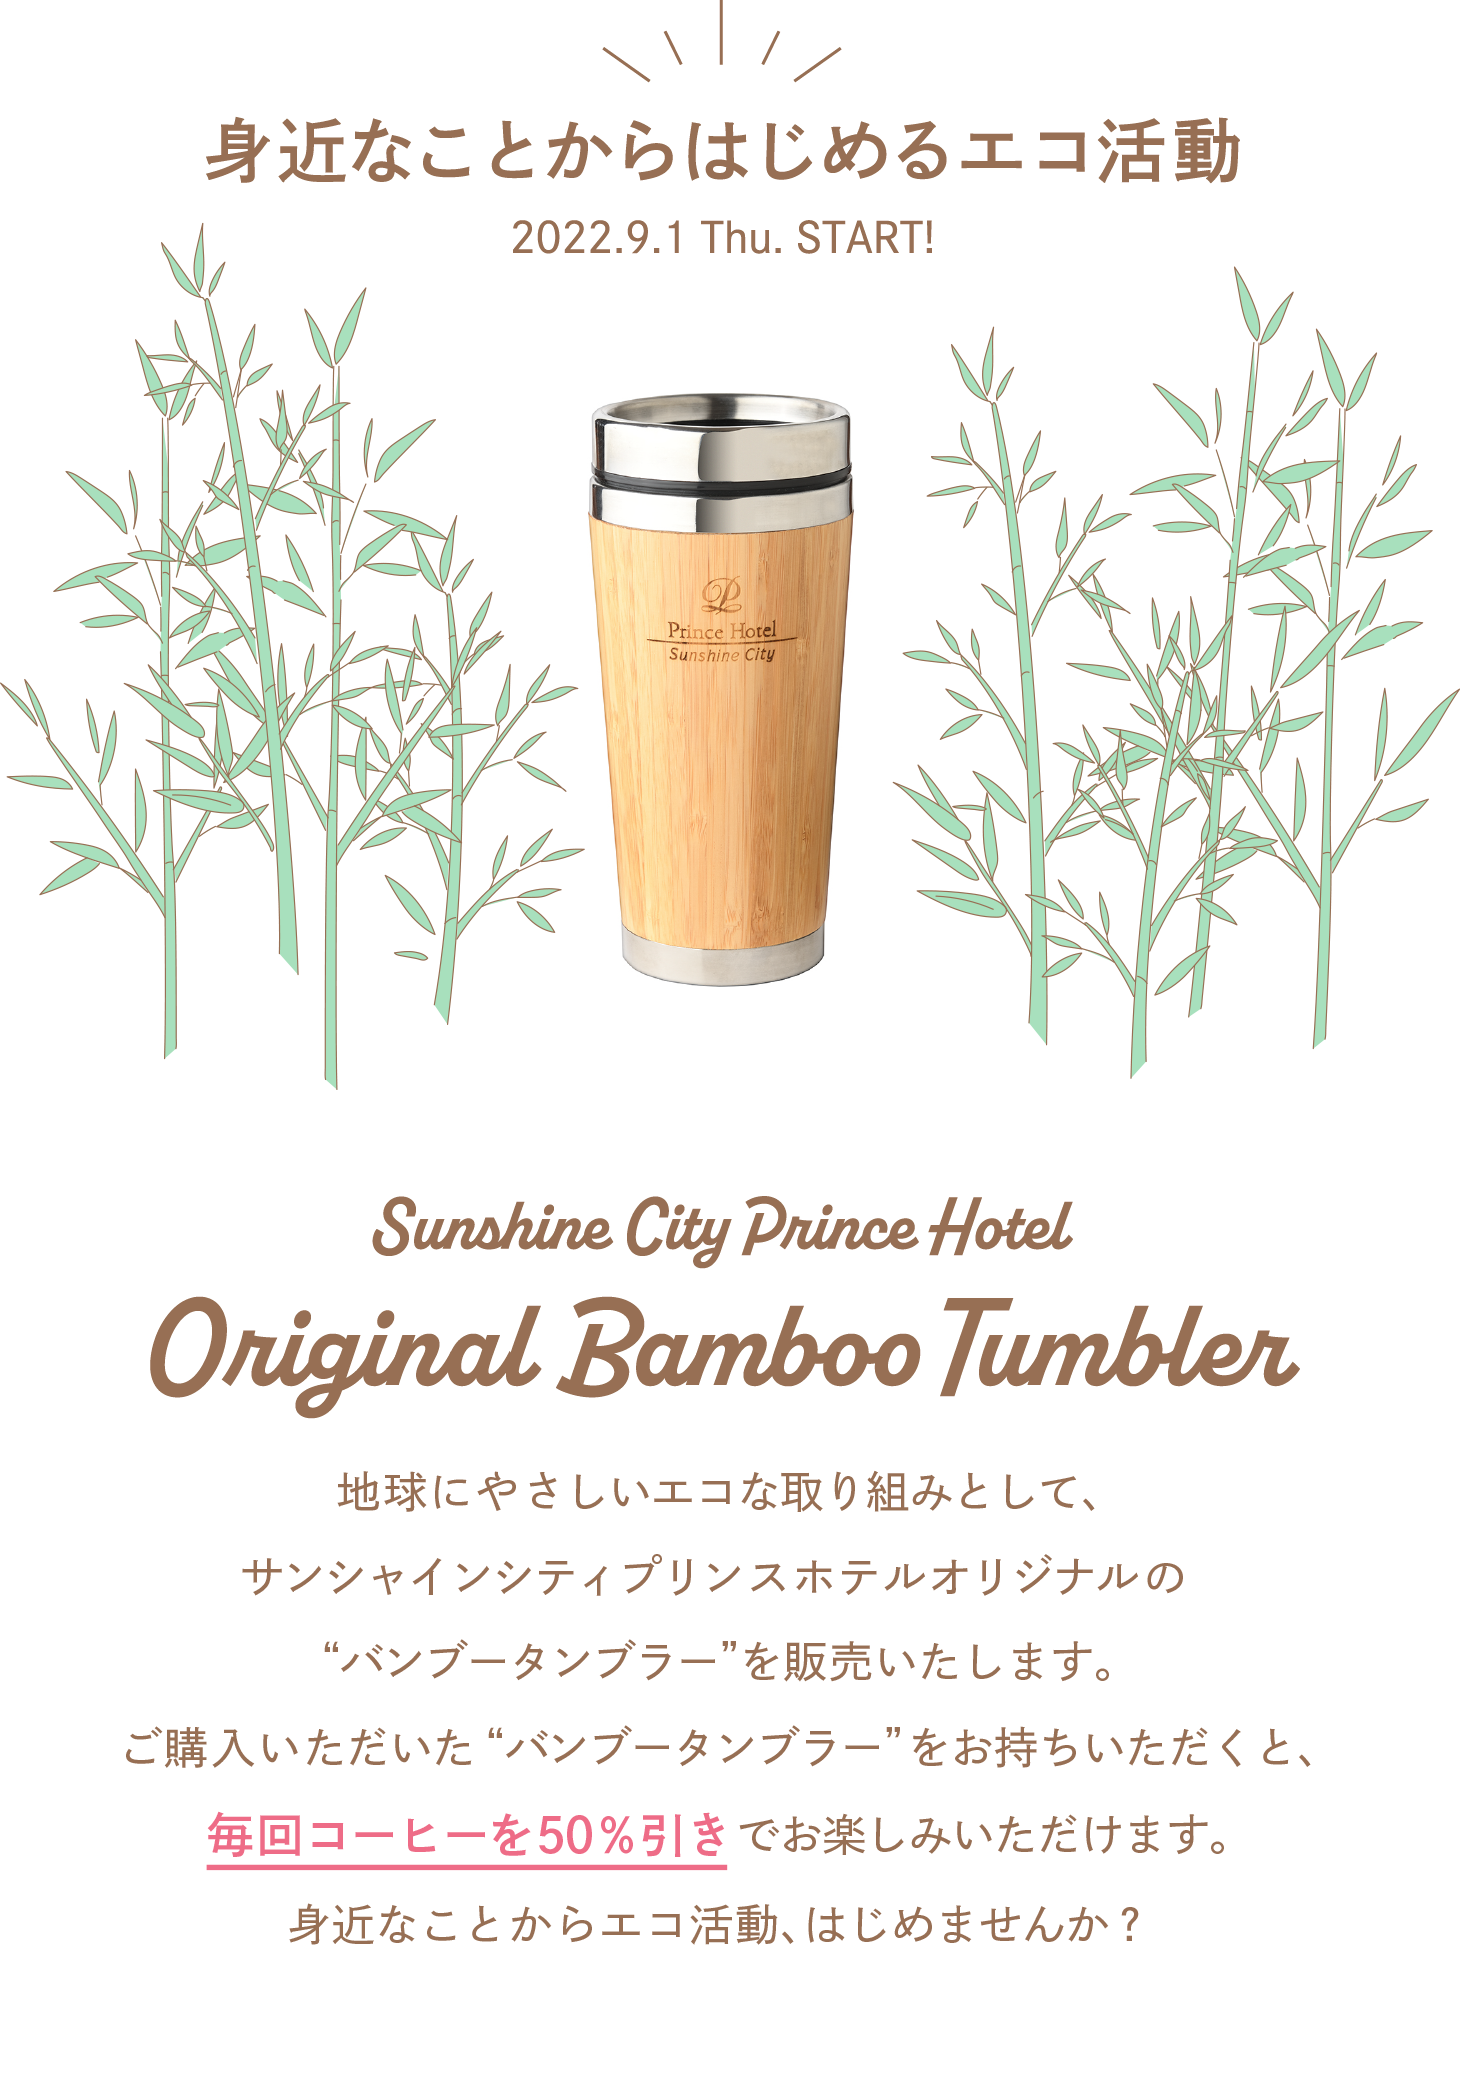 Sunshine City Prince Hotel Original Bamboo Tumbler